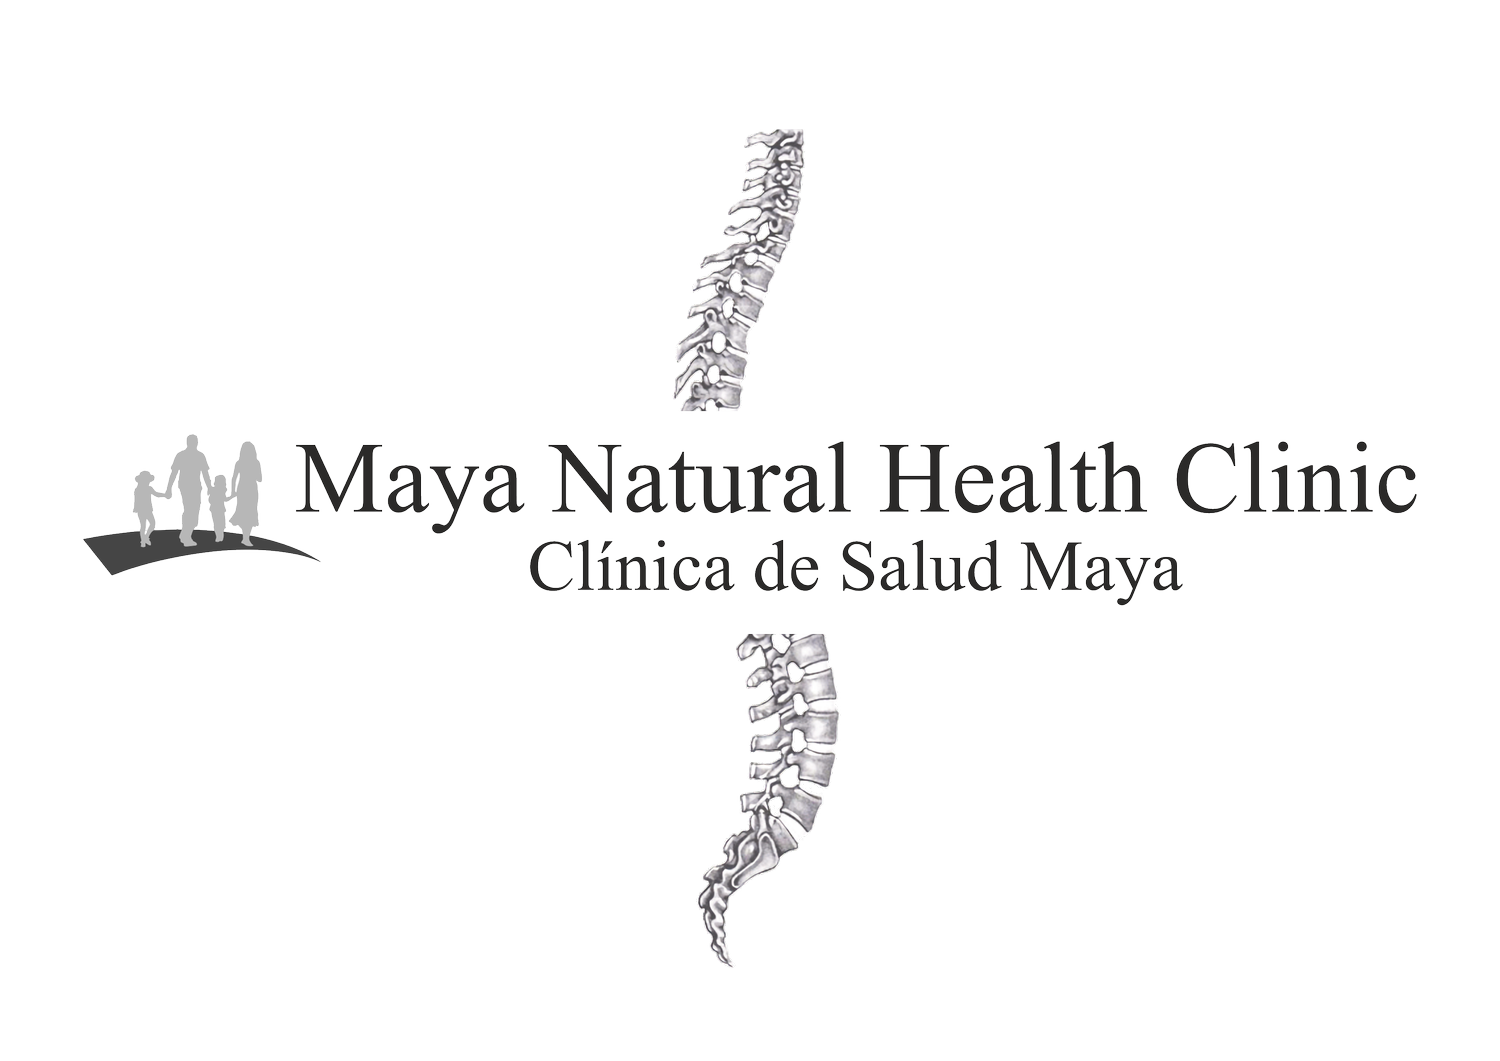 Clínica de Salud Natural Maya